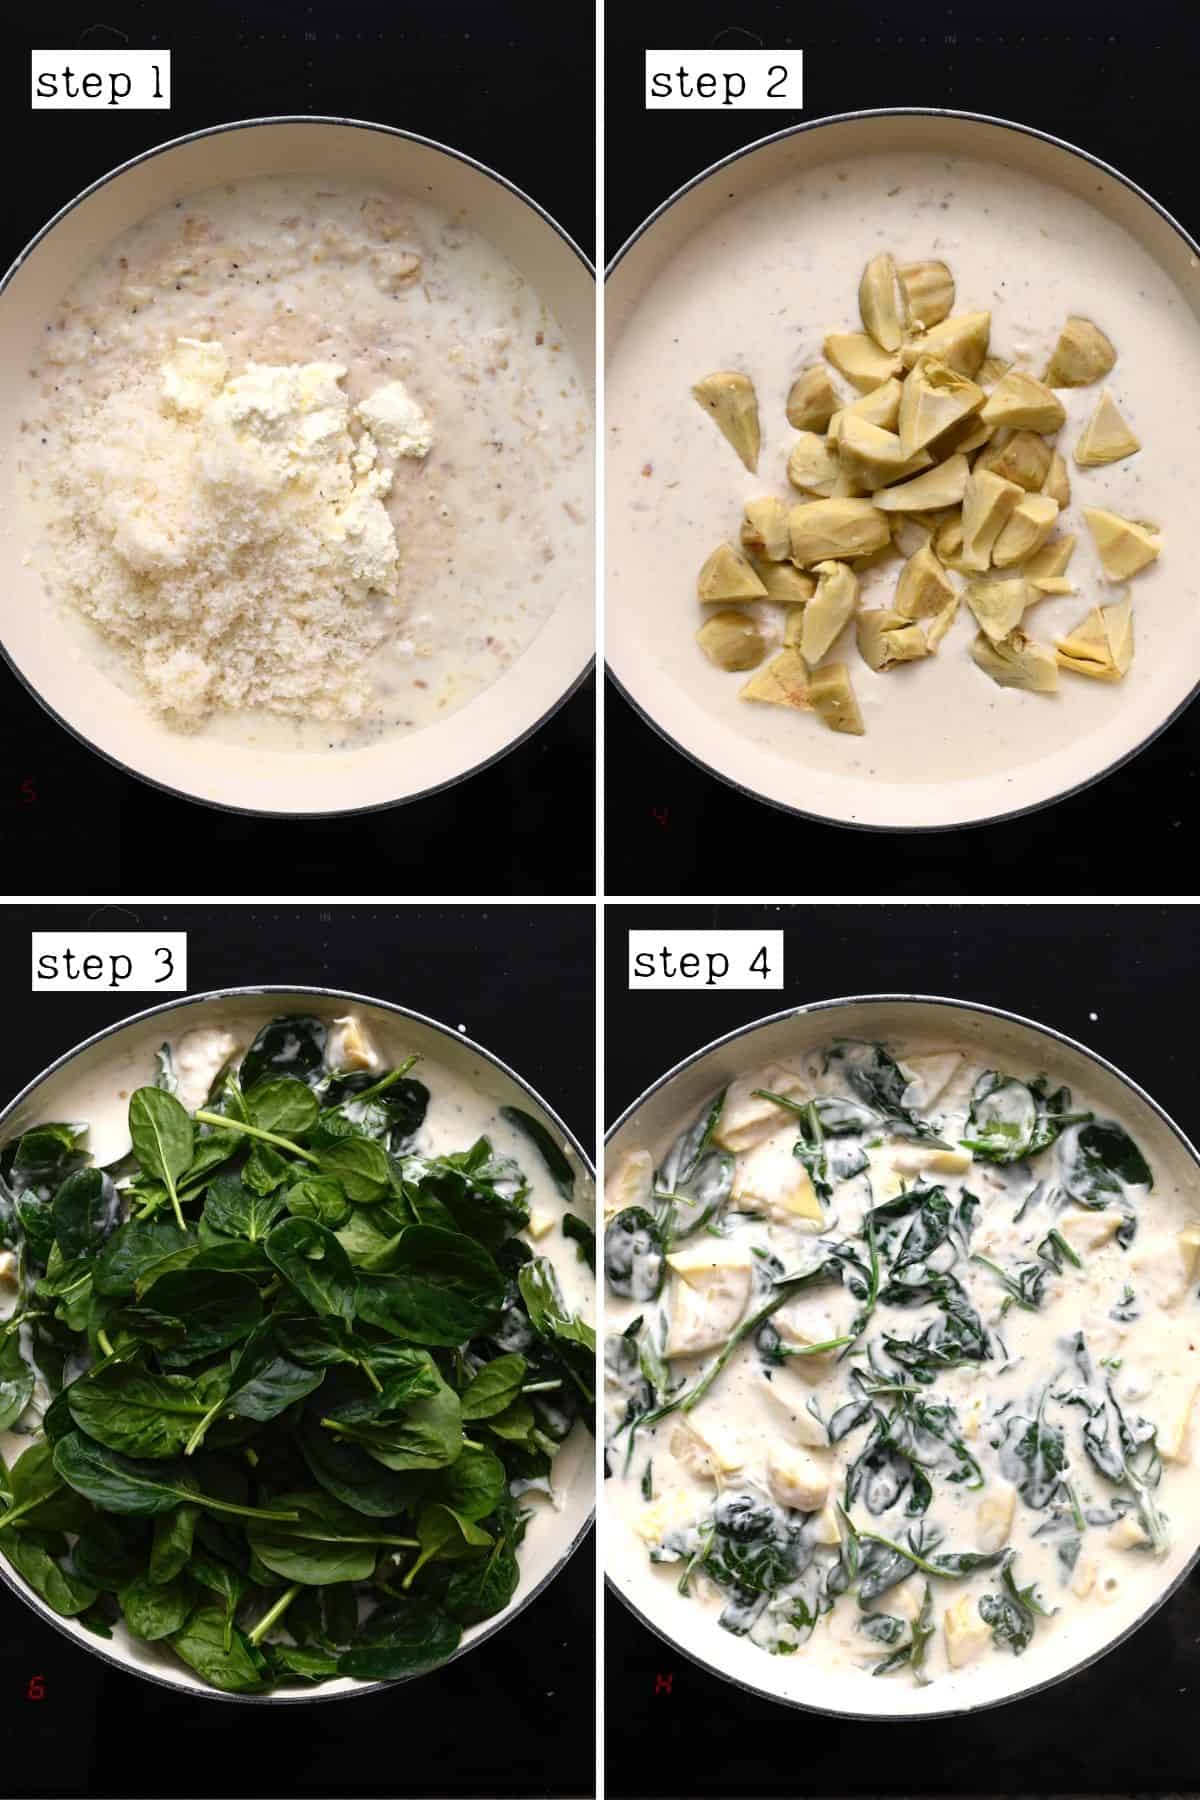 Steps for preparing spinach artichoke dip